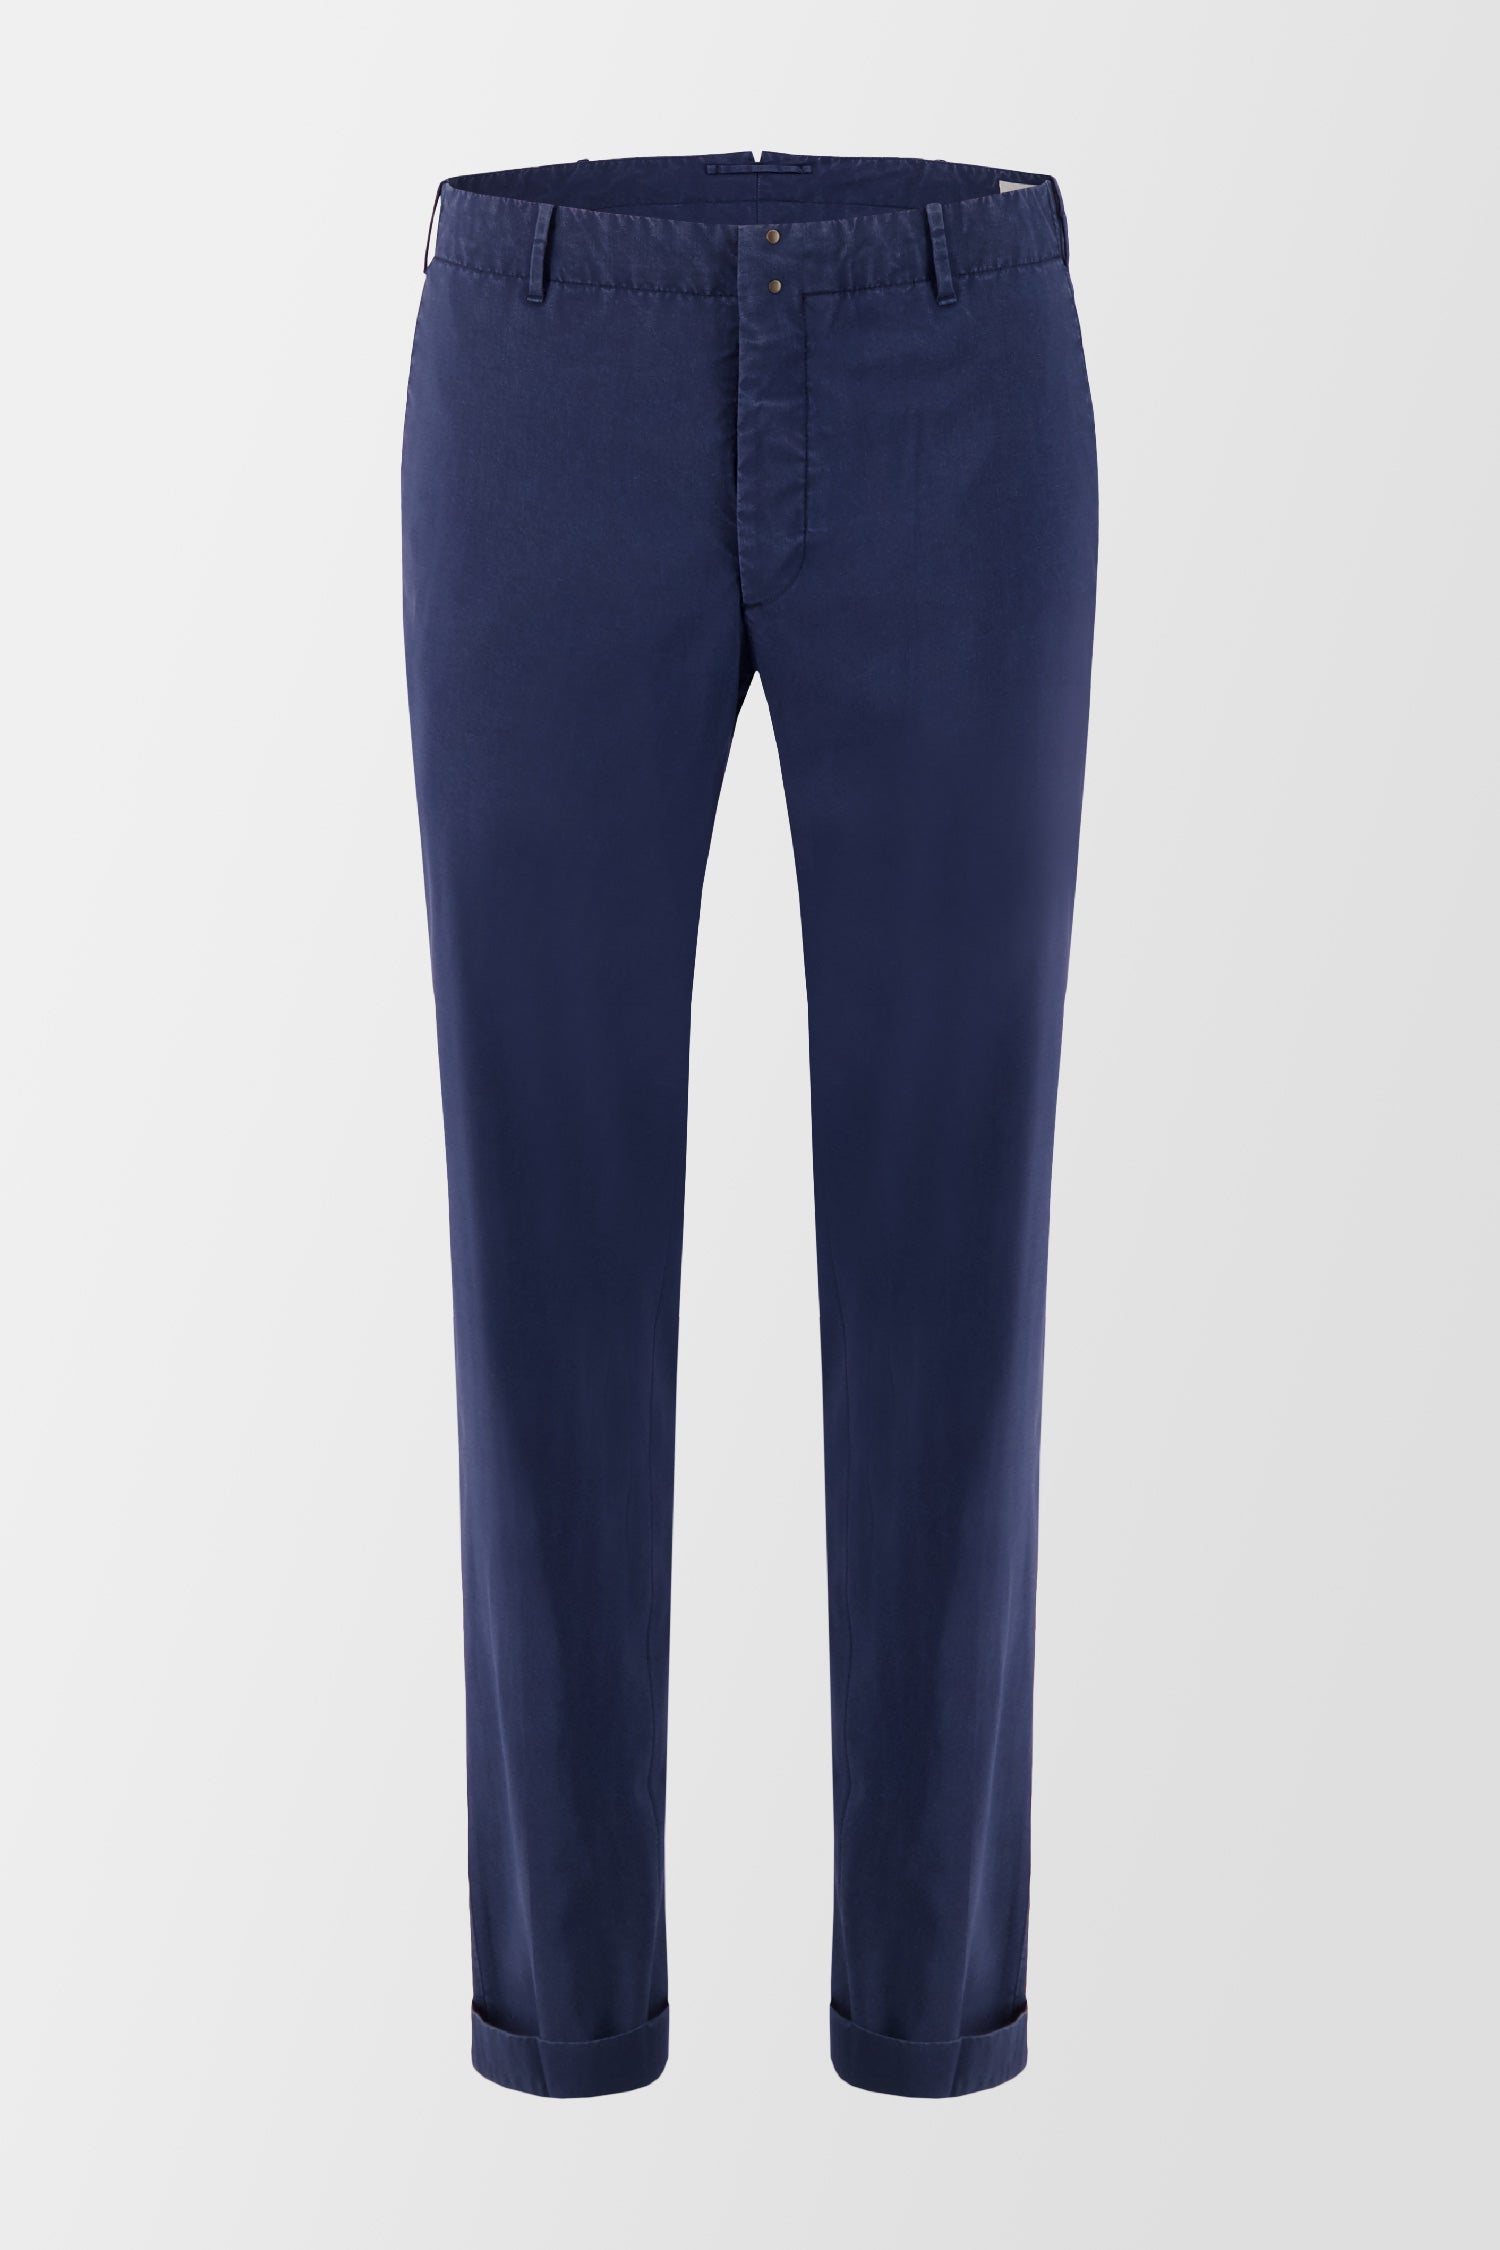 Incotex Blue Classic Trousers